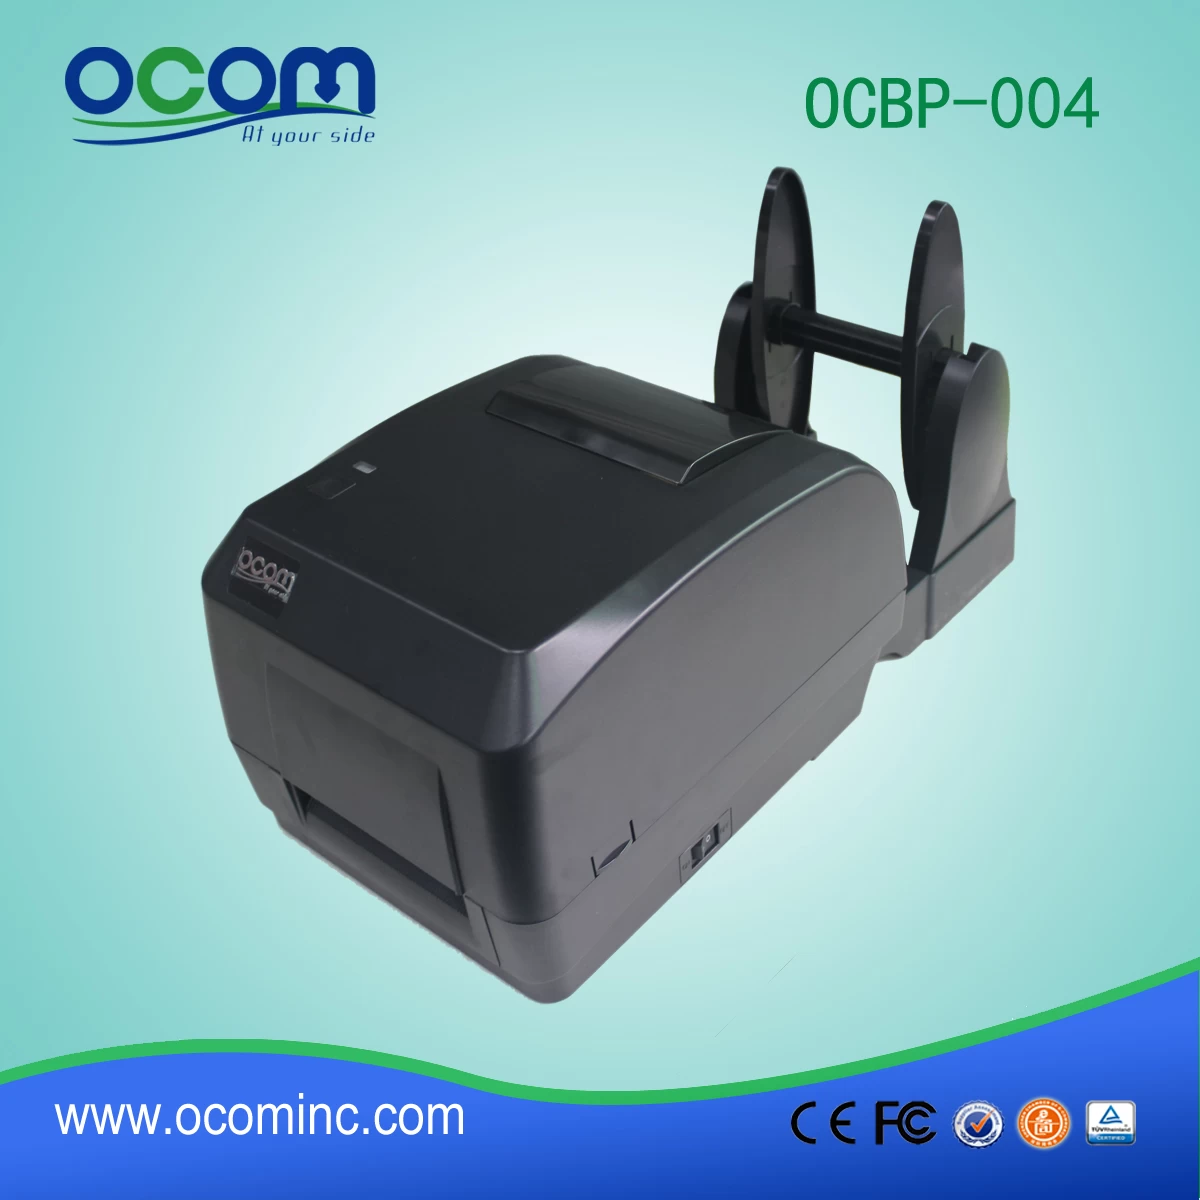 (OCBP-004) China factory made thermal transfer printer price